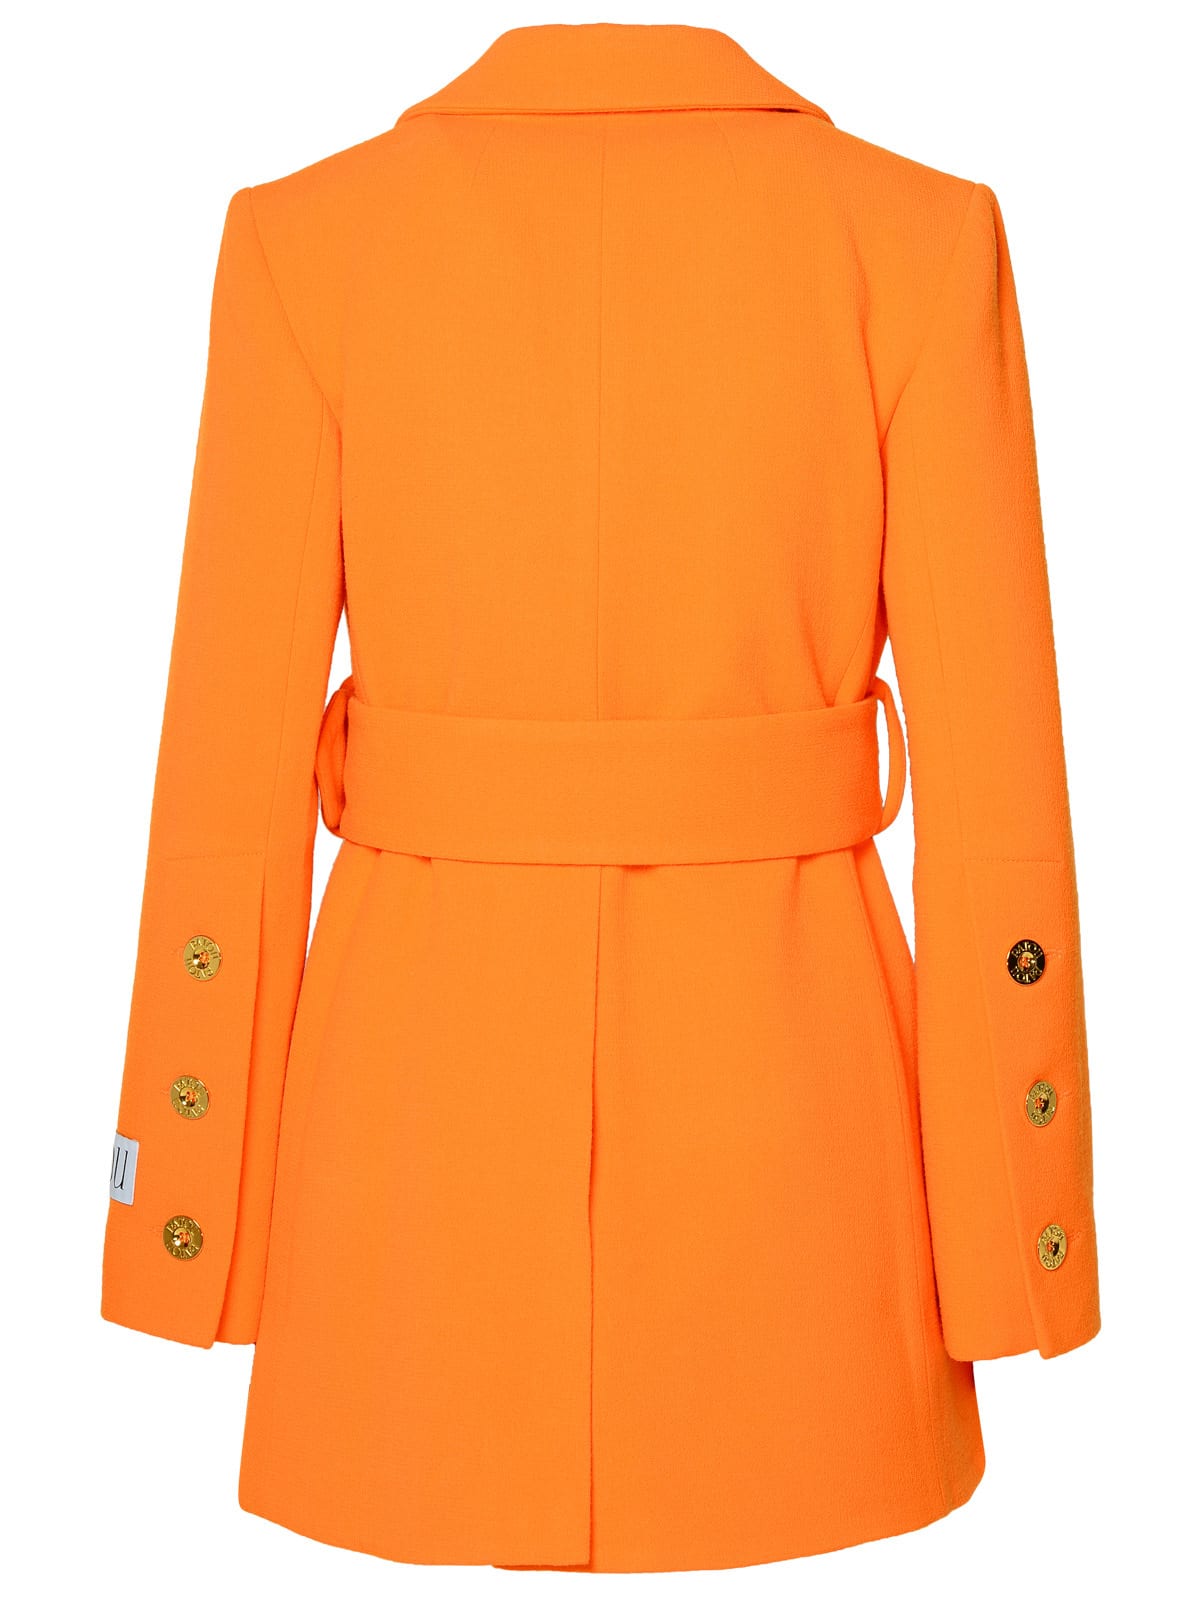 Shop Patou Orange Virgin Wool Coat